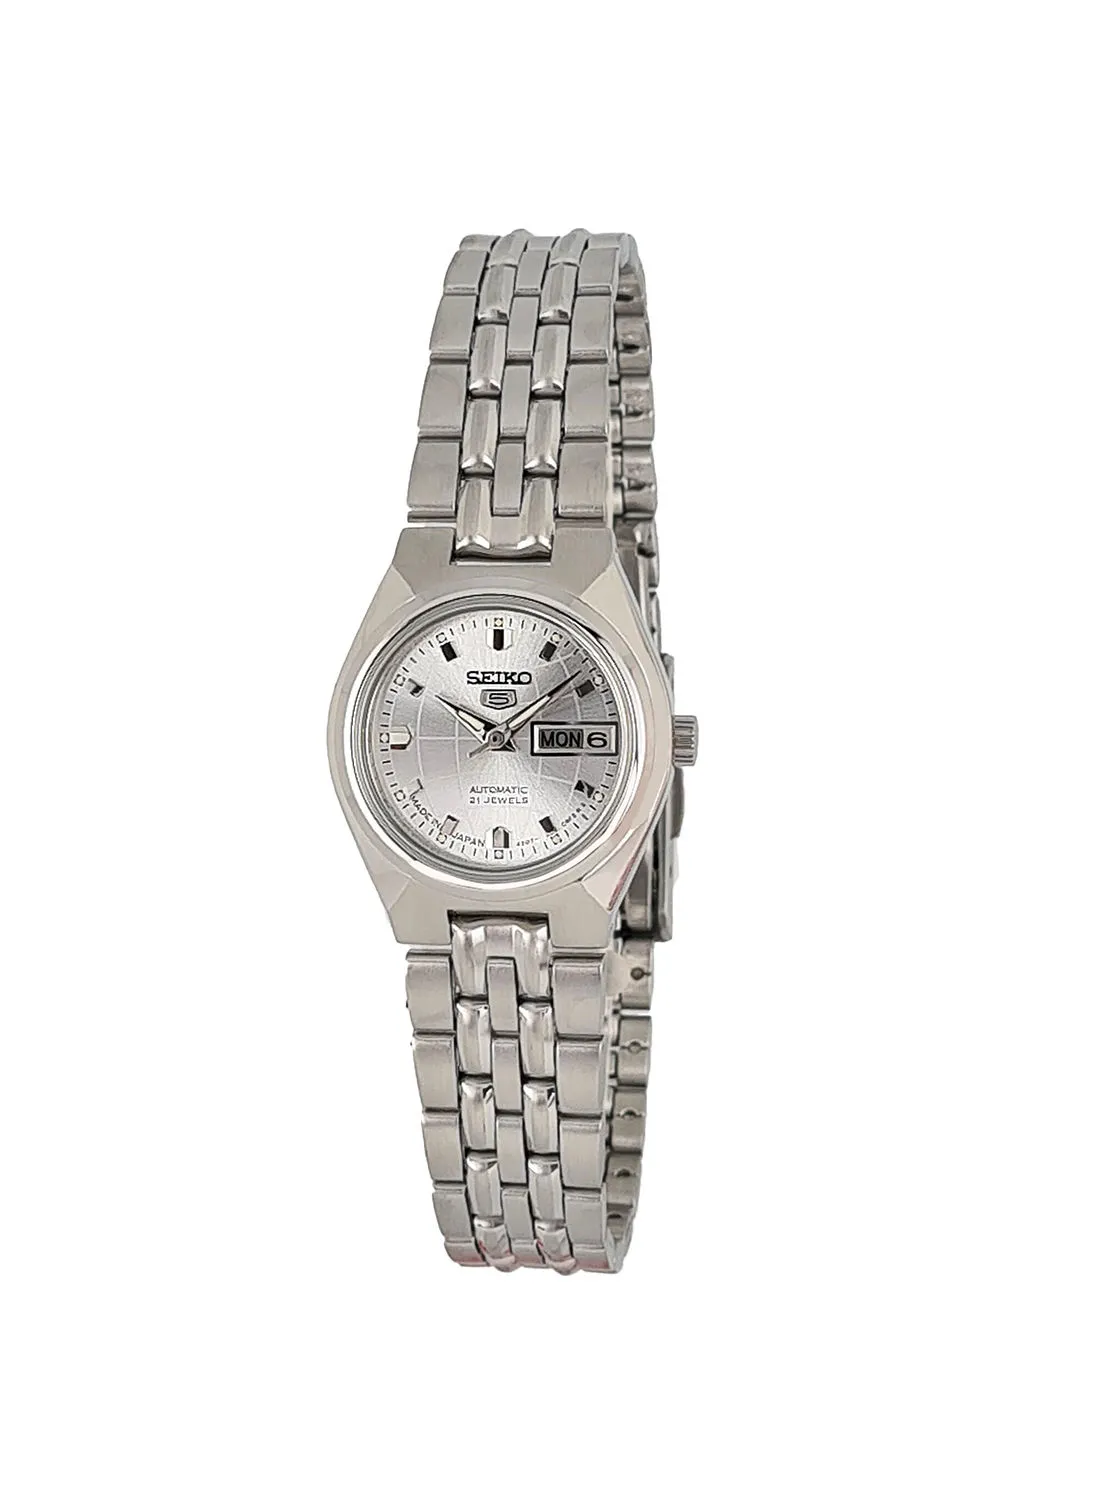 Seiko Women's Round Shape Stainless Steel Analog Wrist Watch 23 mm - Silver - SYMK39J1